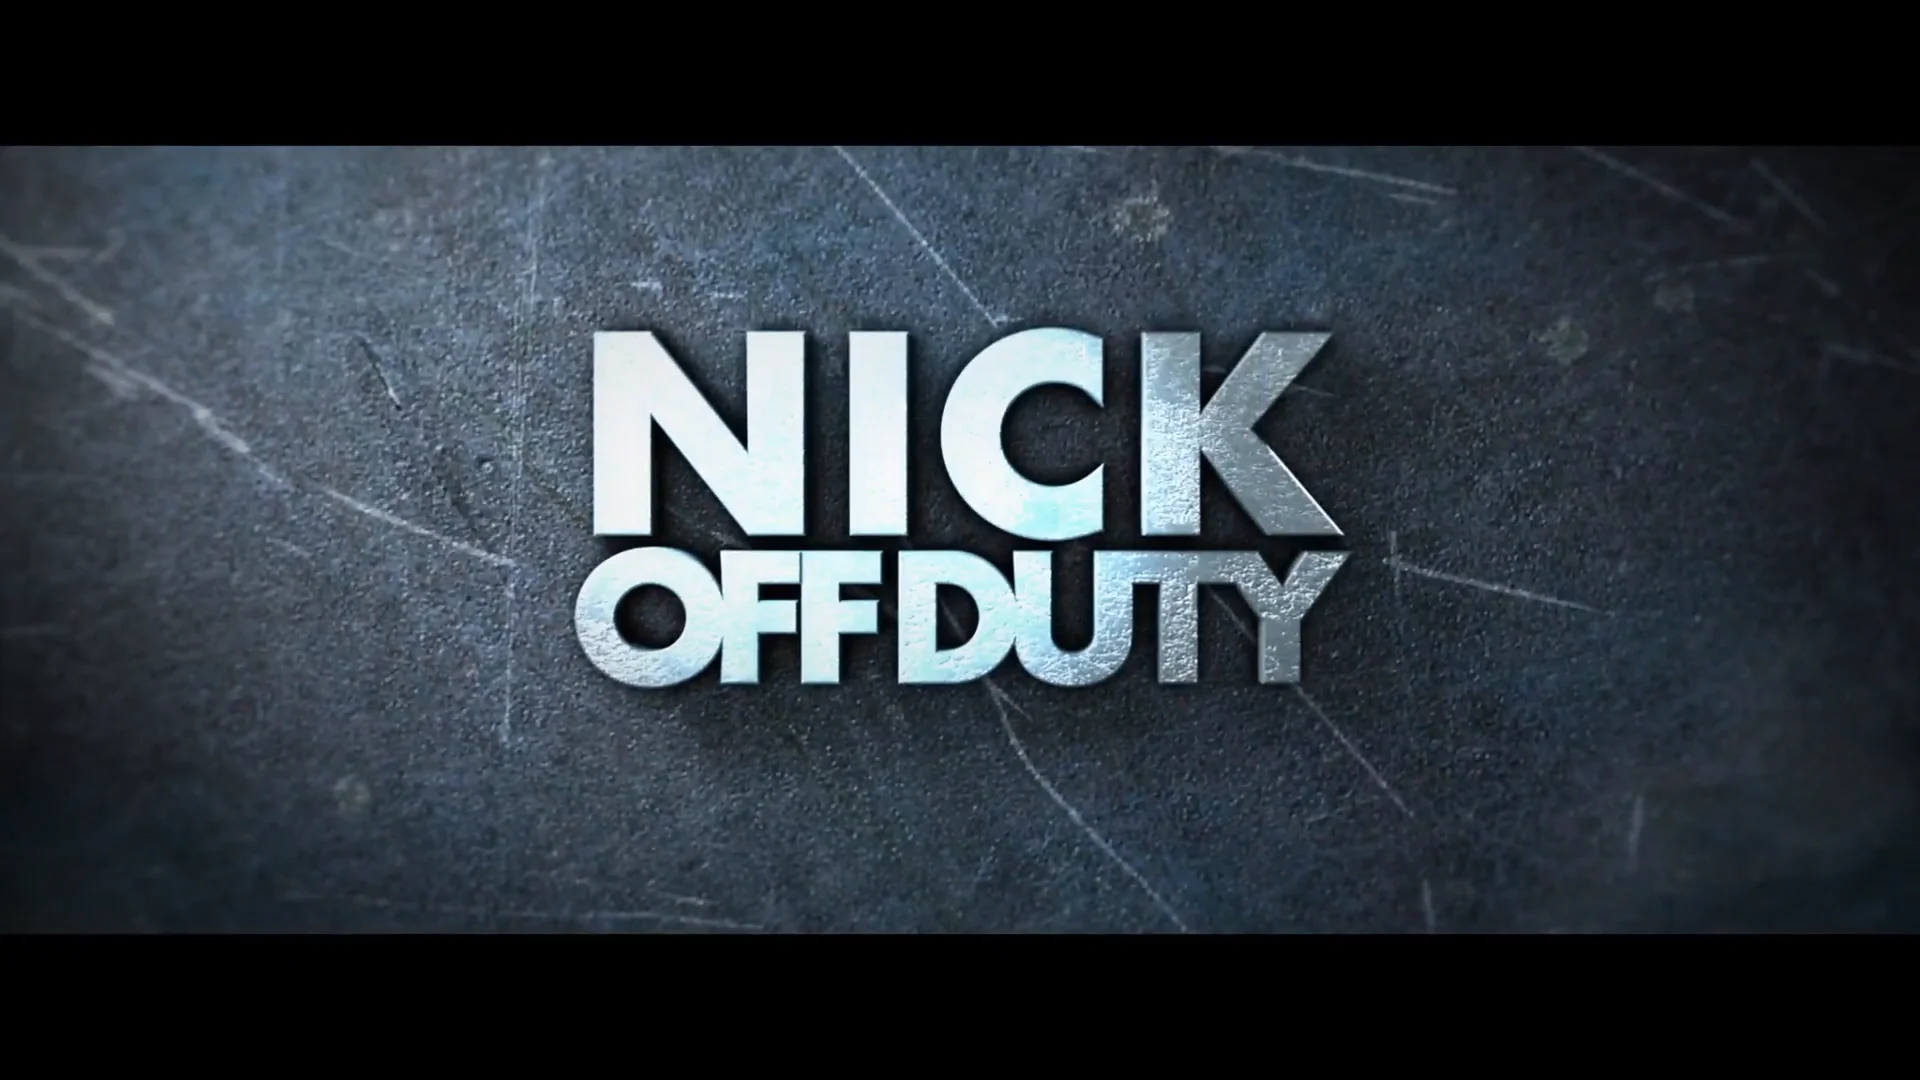 Nick - Off Duty